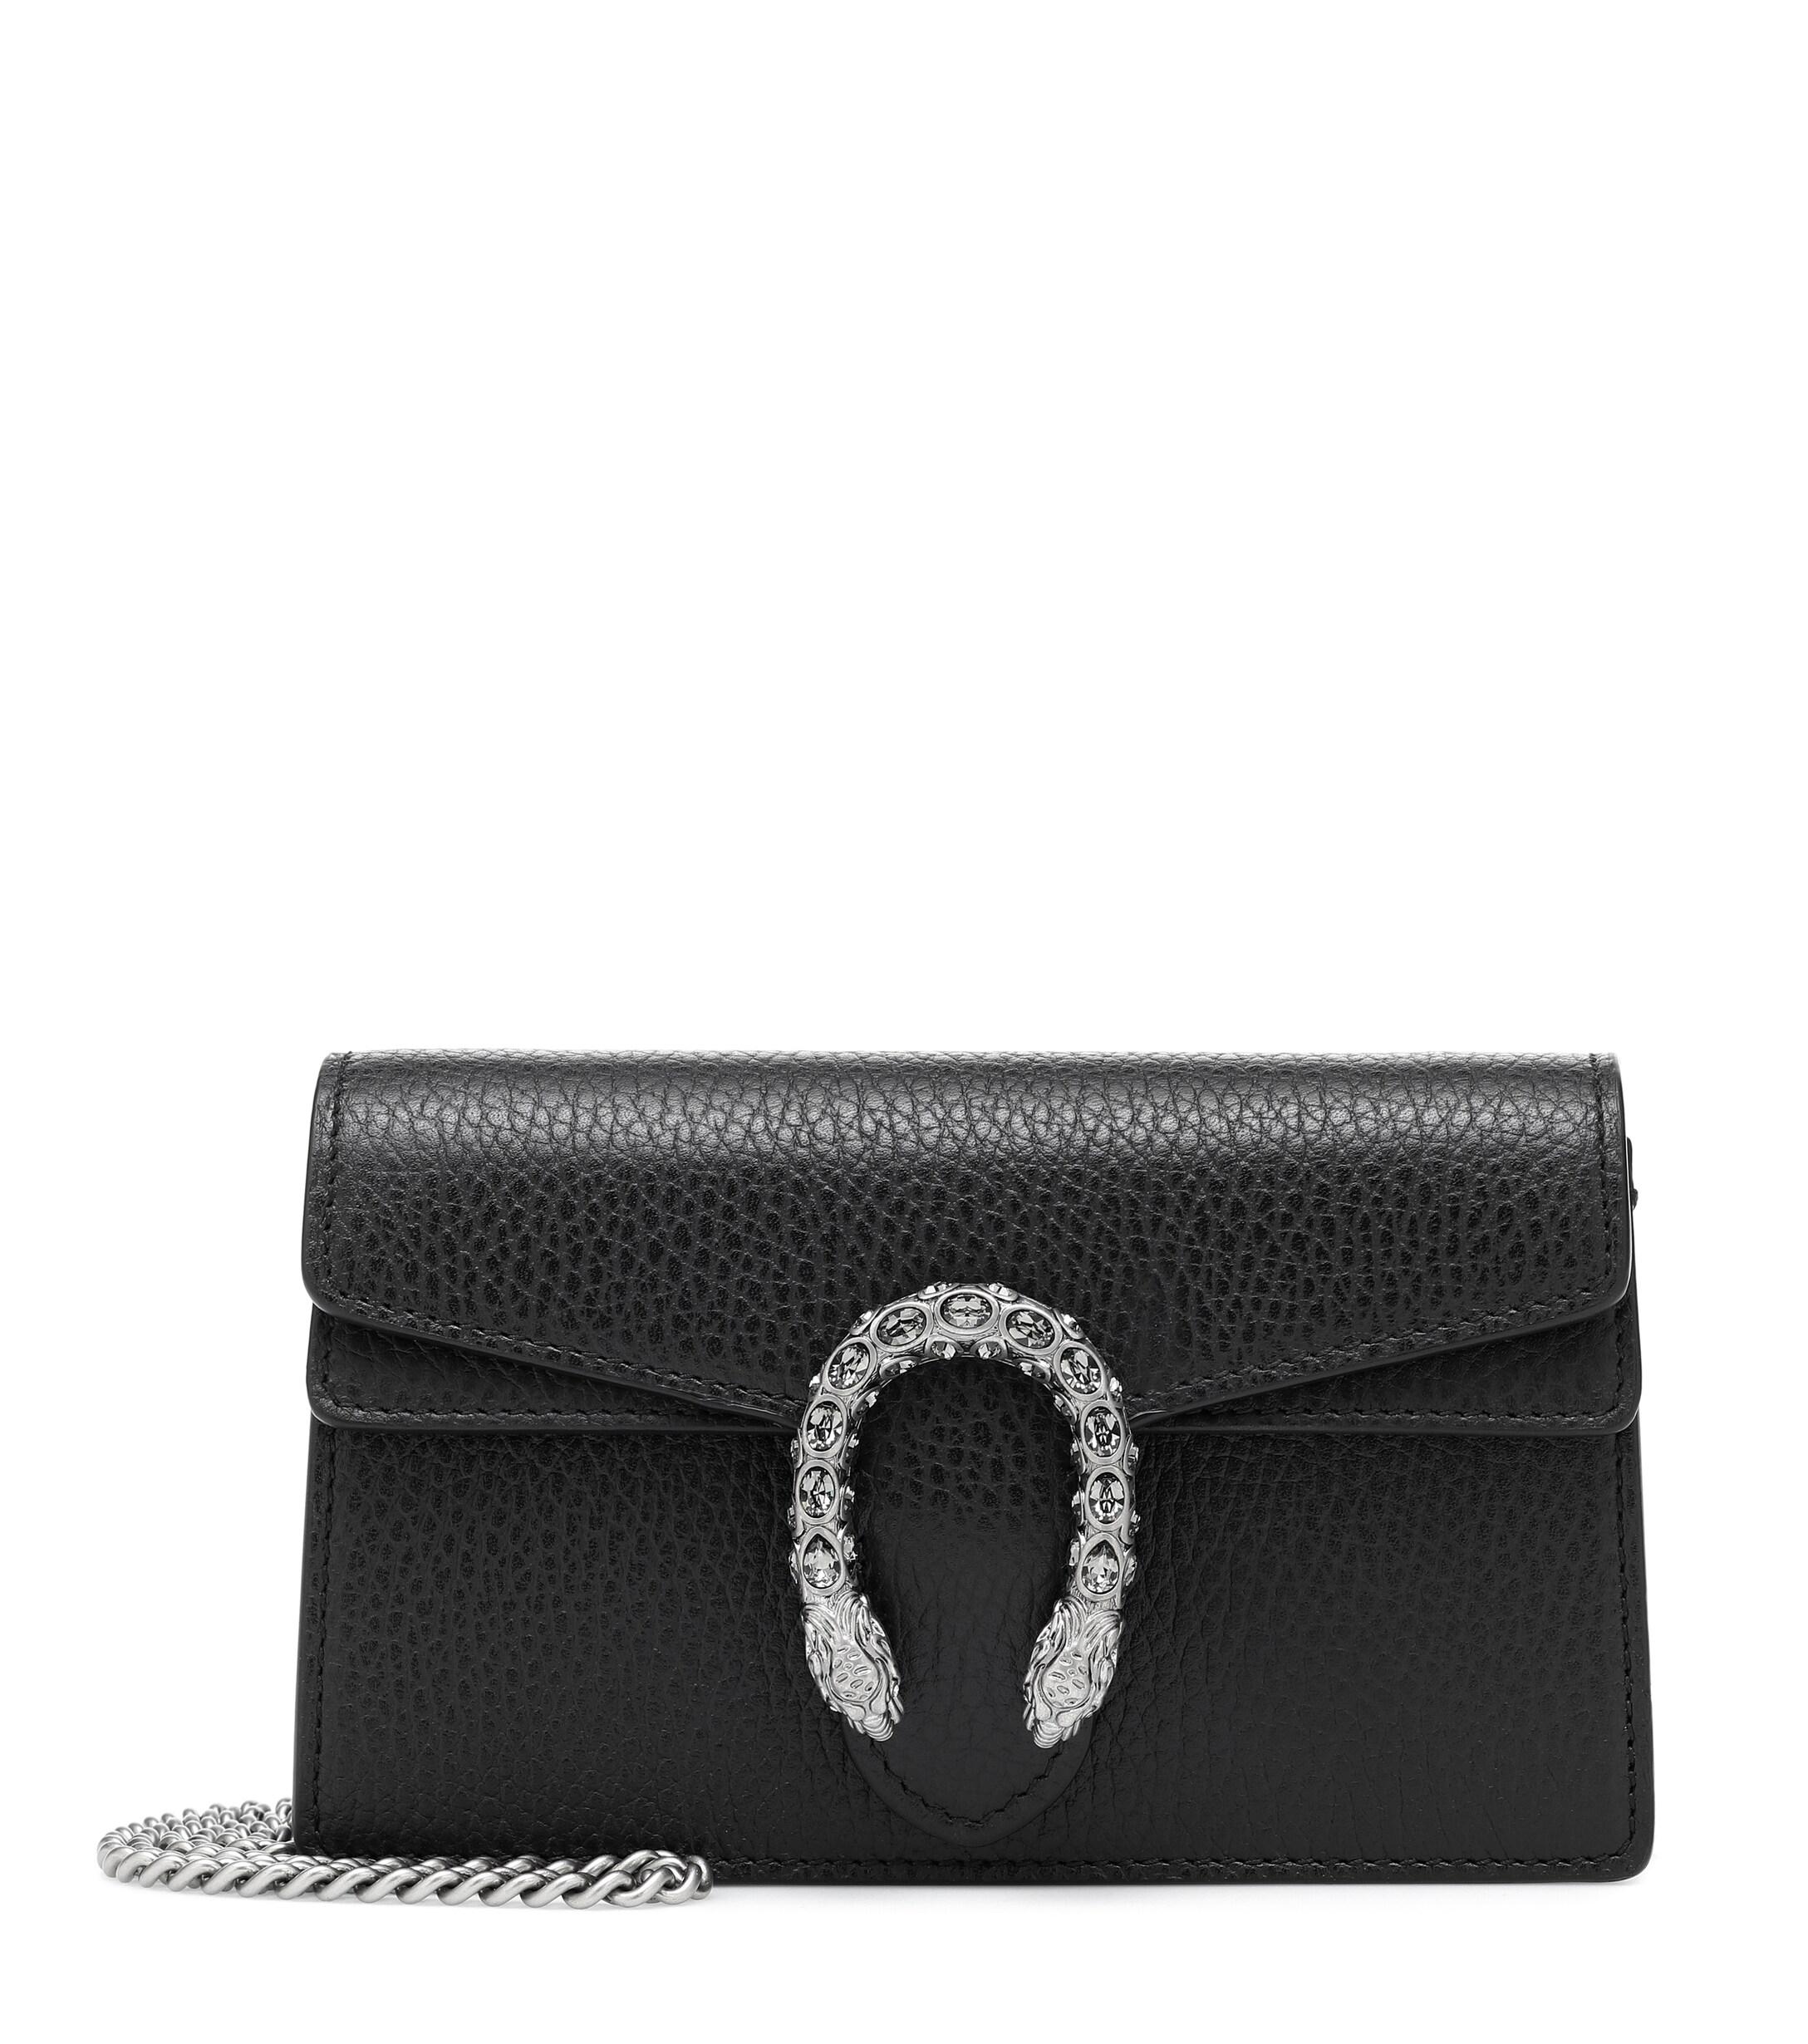 Gucci Velvet Dionysus Super Mini Bag in Nero/bl.Diamond (Black) - Lyst